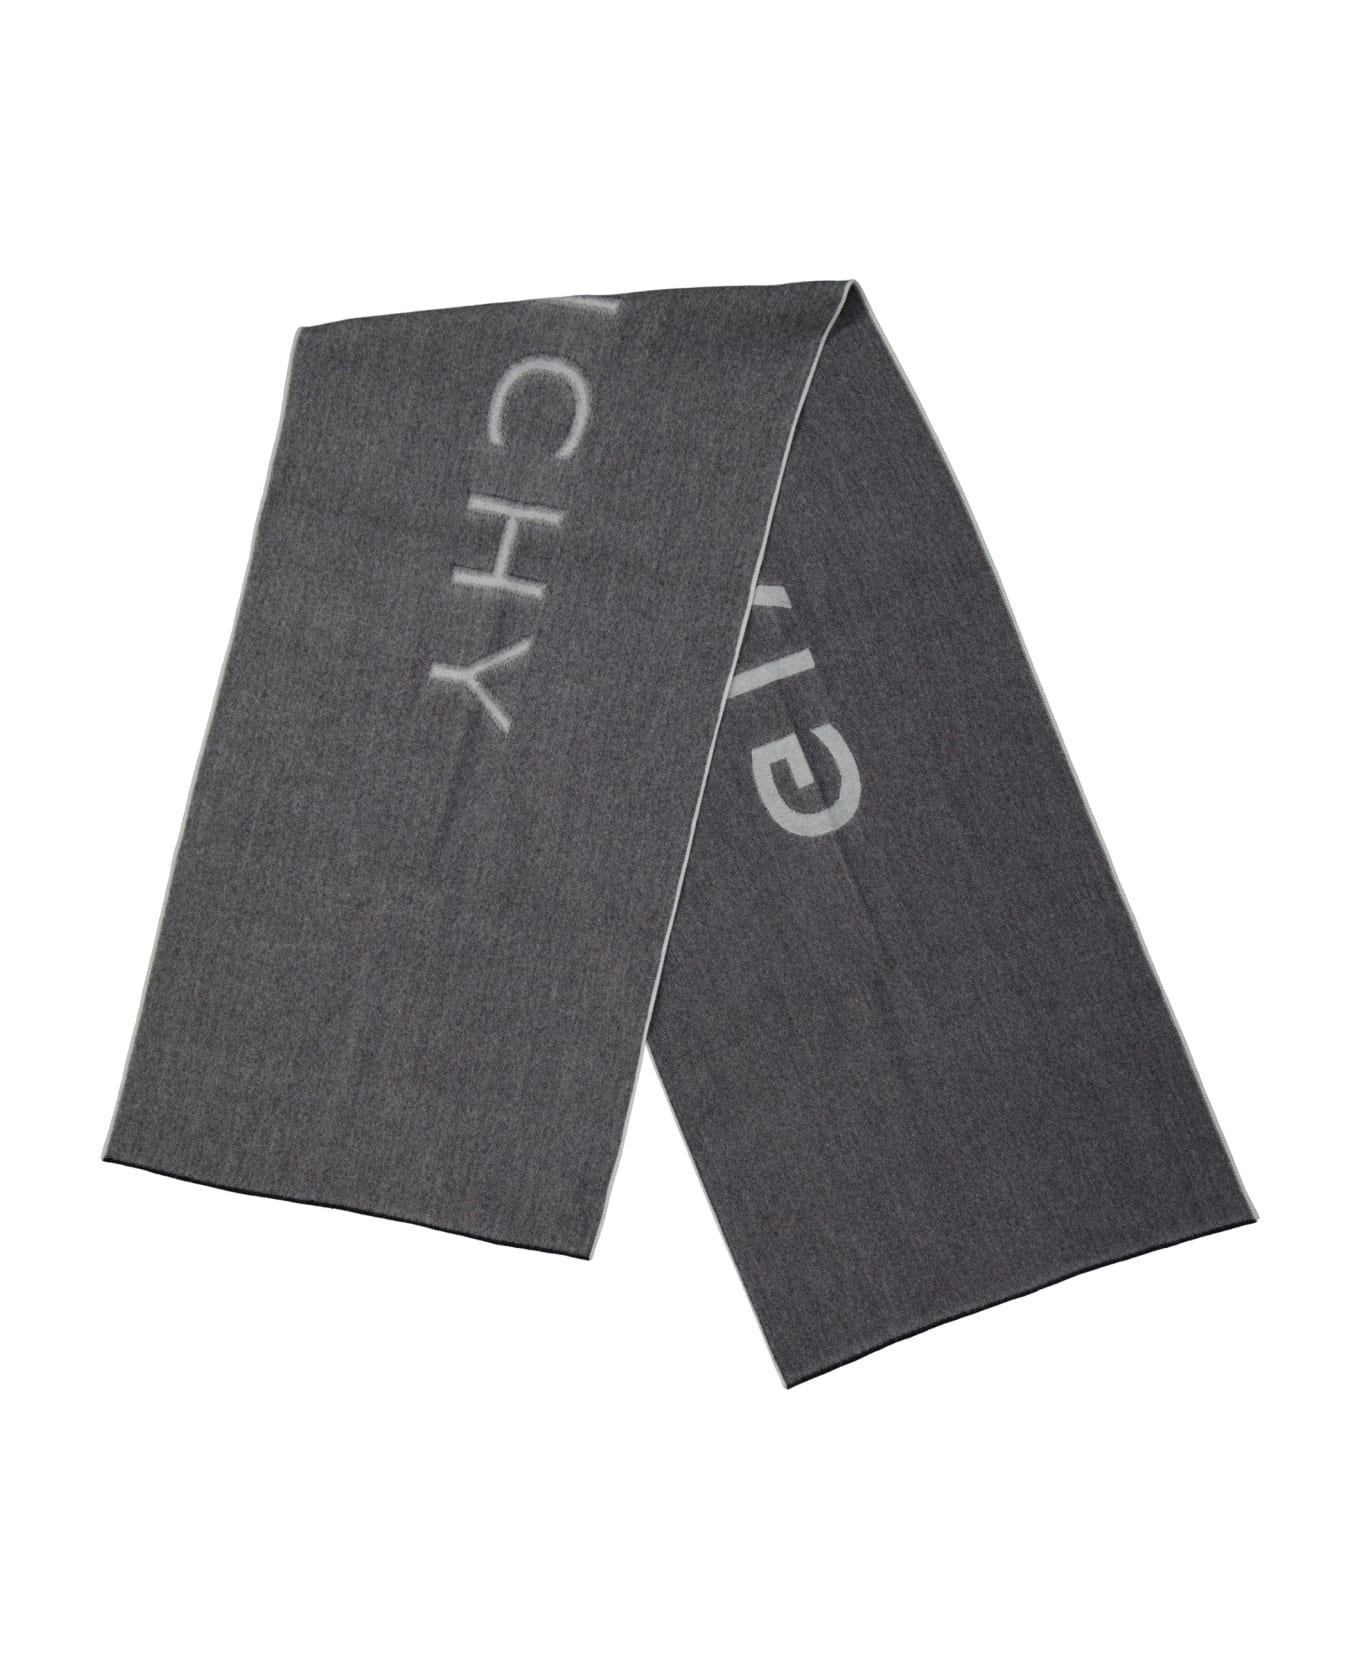 Givenchy Logo Wool Scarf - Gray